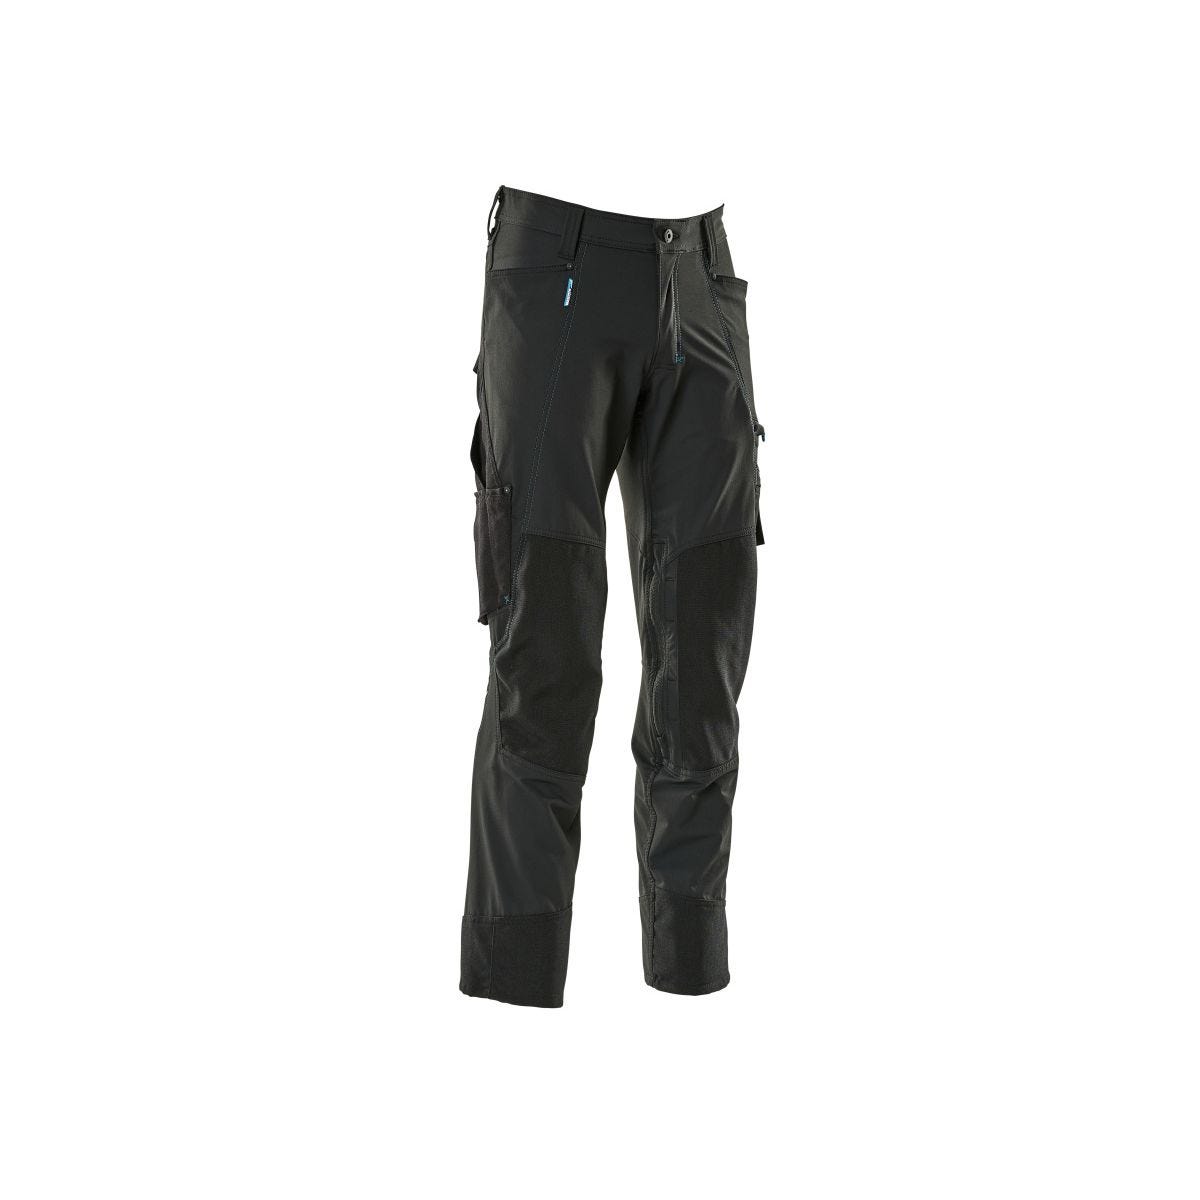 Pantalon avec poches genouillères ULTIMATE STRETCH Noir - Mascot - Taille W38.5/L32 1